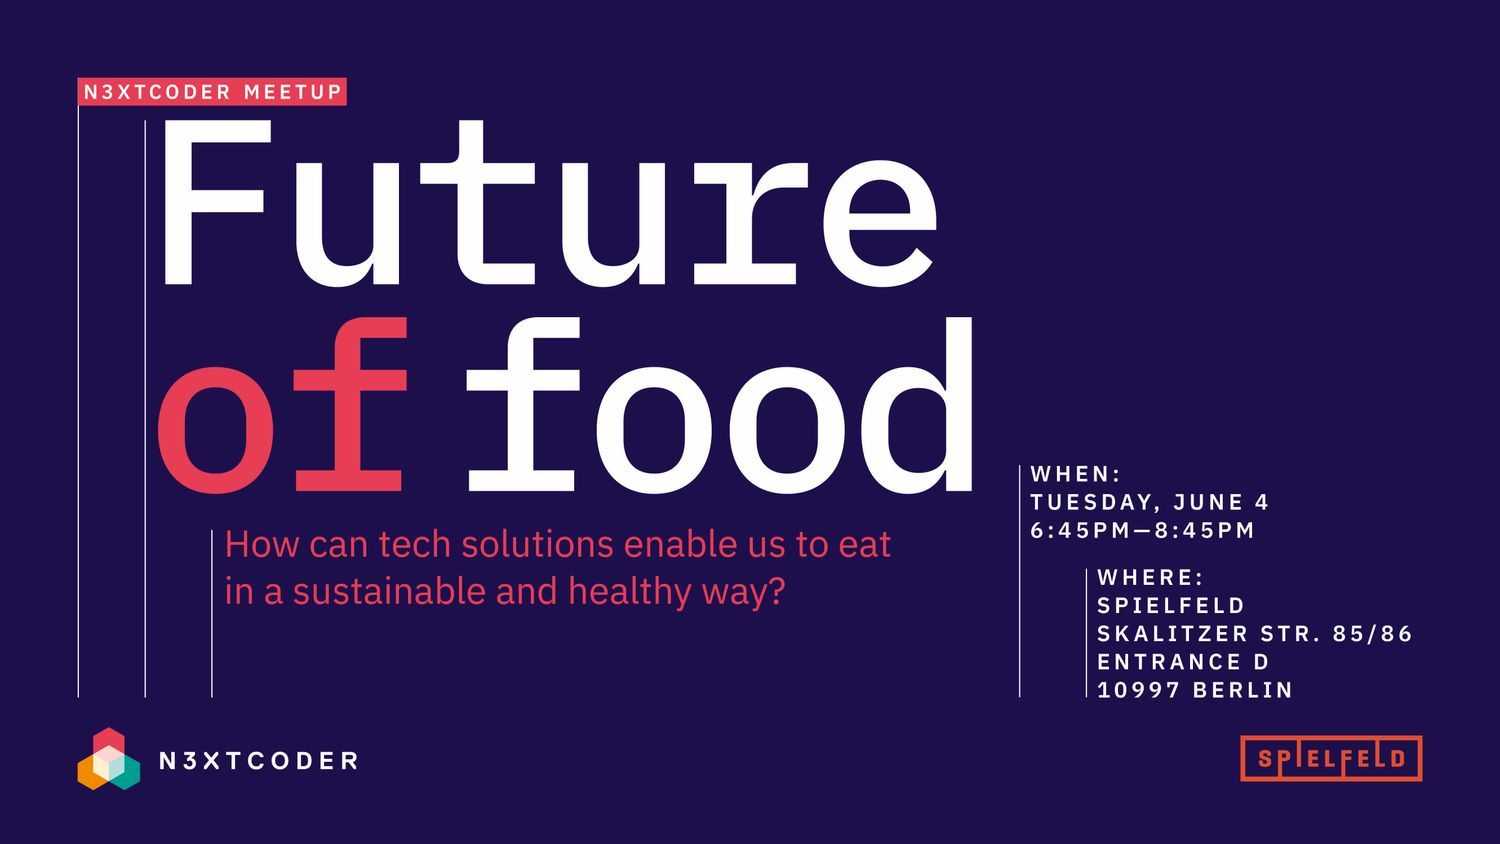 N3XTCODER Meetup - Future of Food